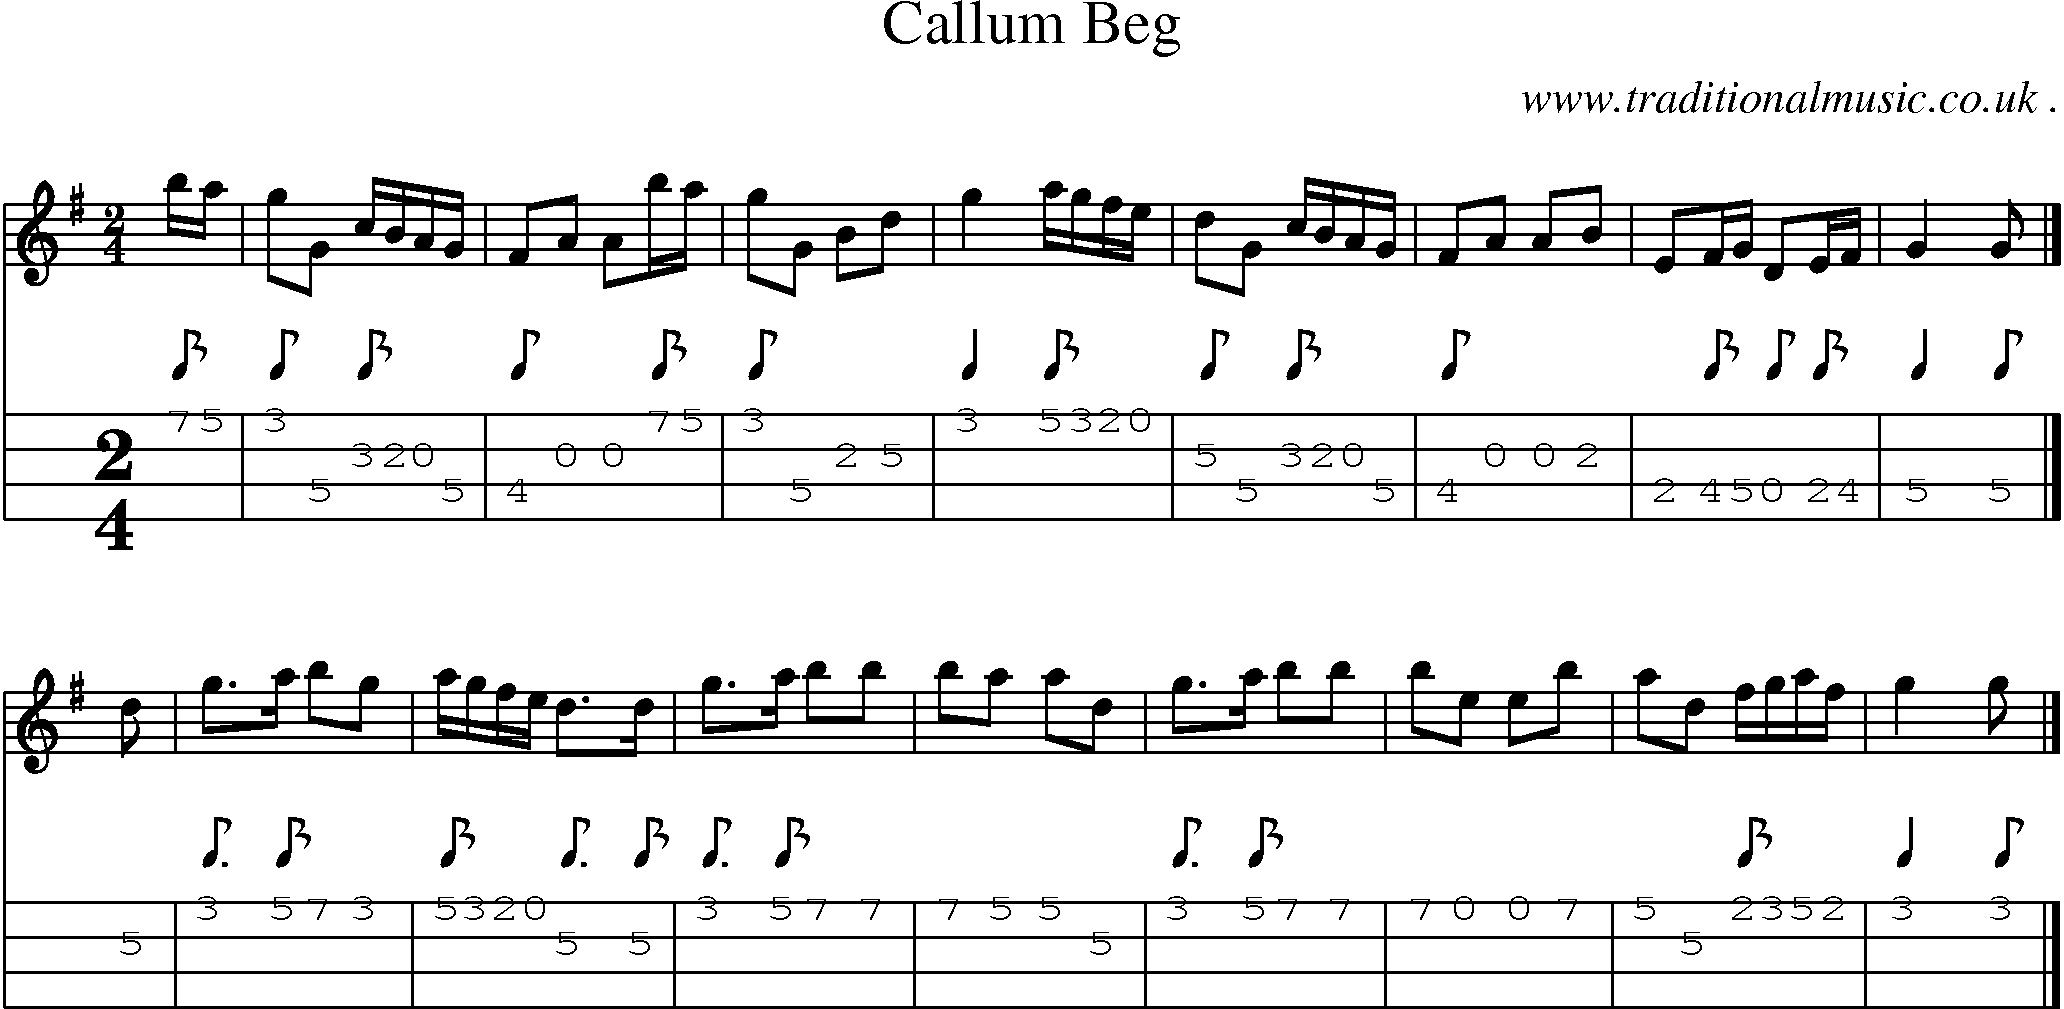 Sheet-music  score, Chords and Mandolin Tabs for Callum Beg